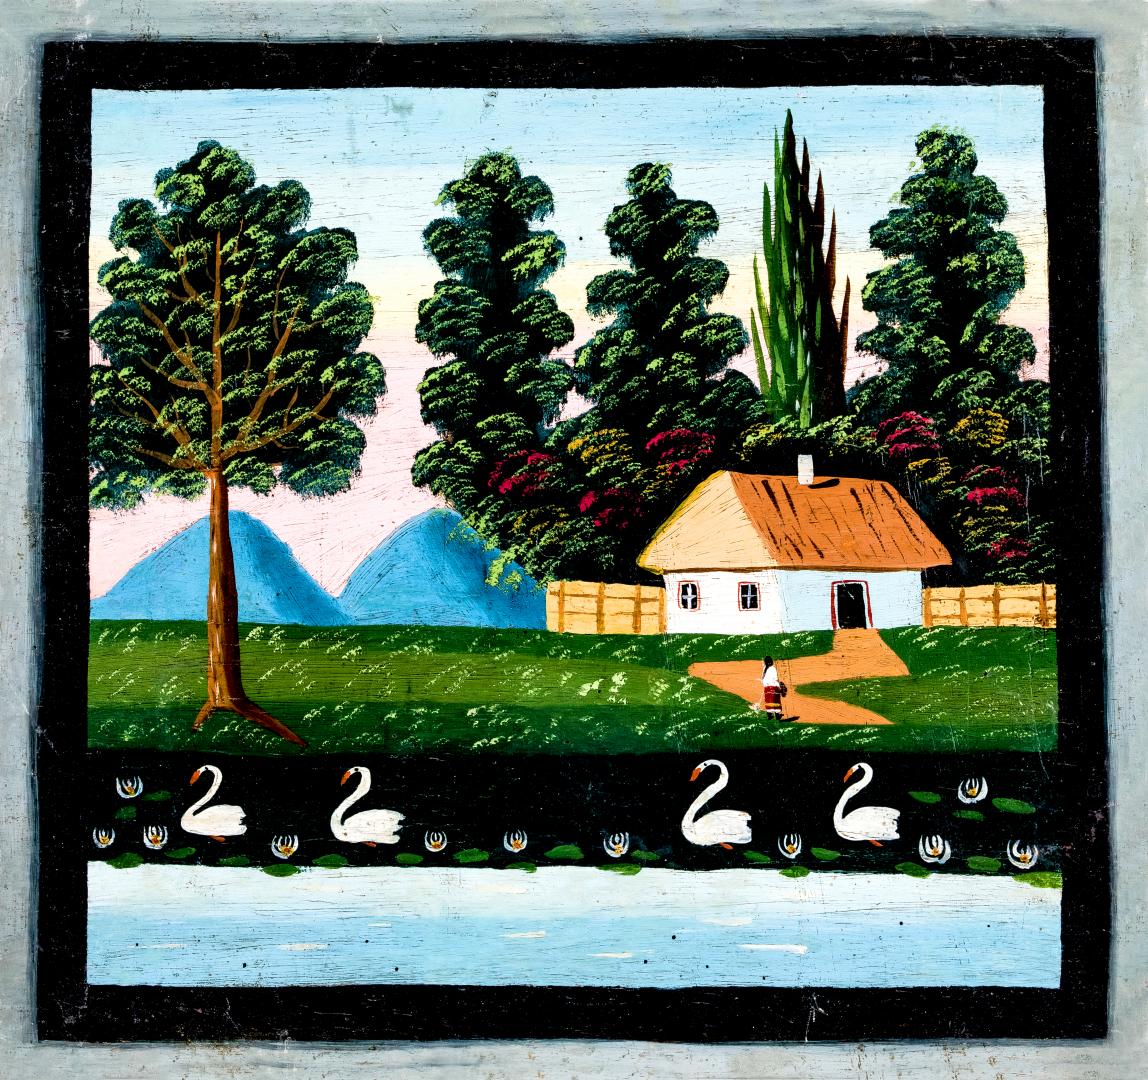 Rural landscape with swans